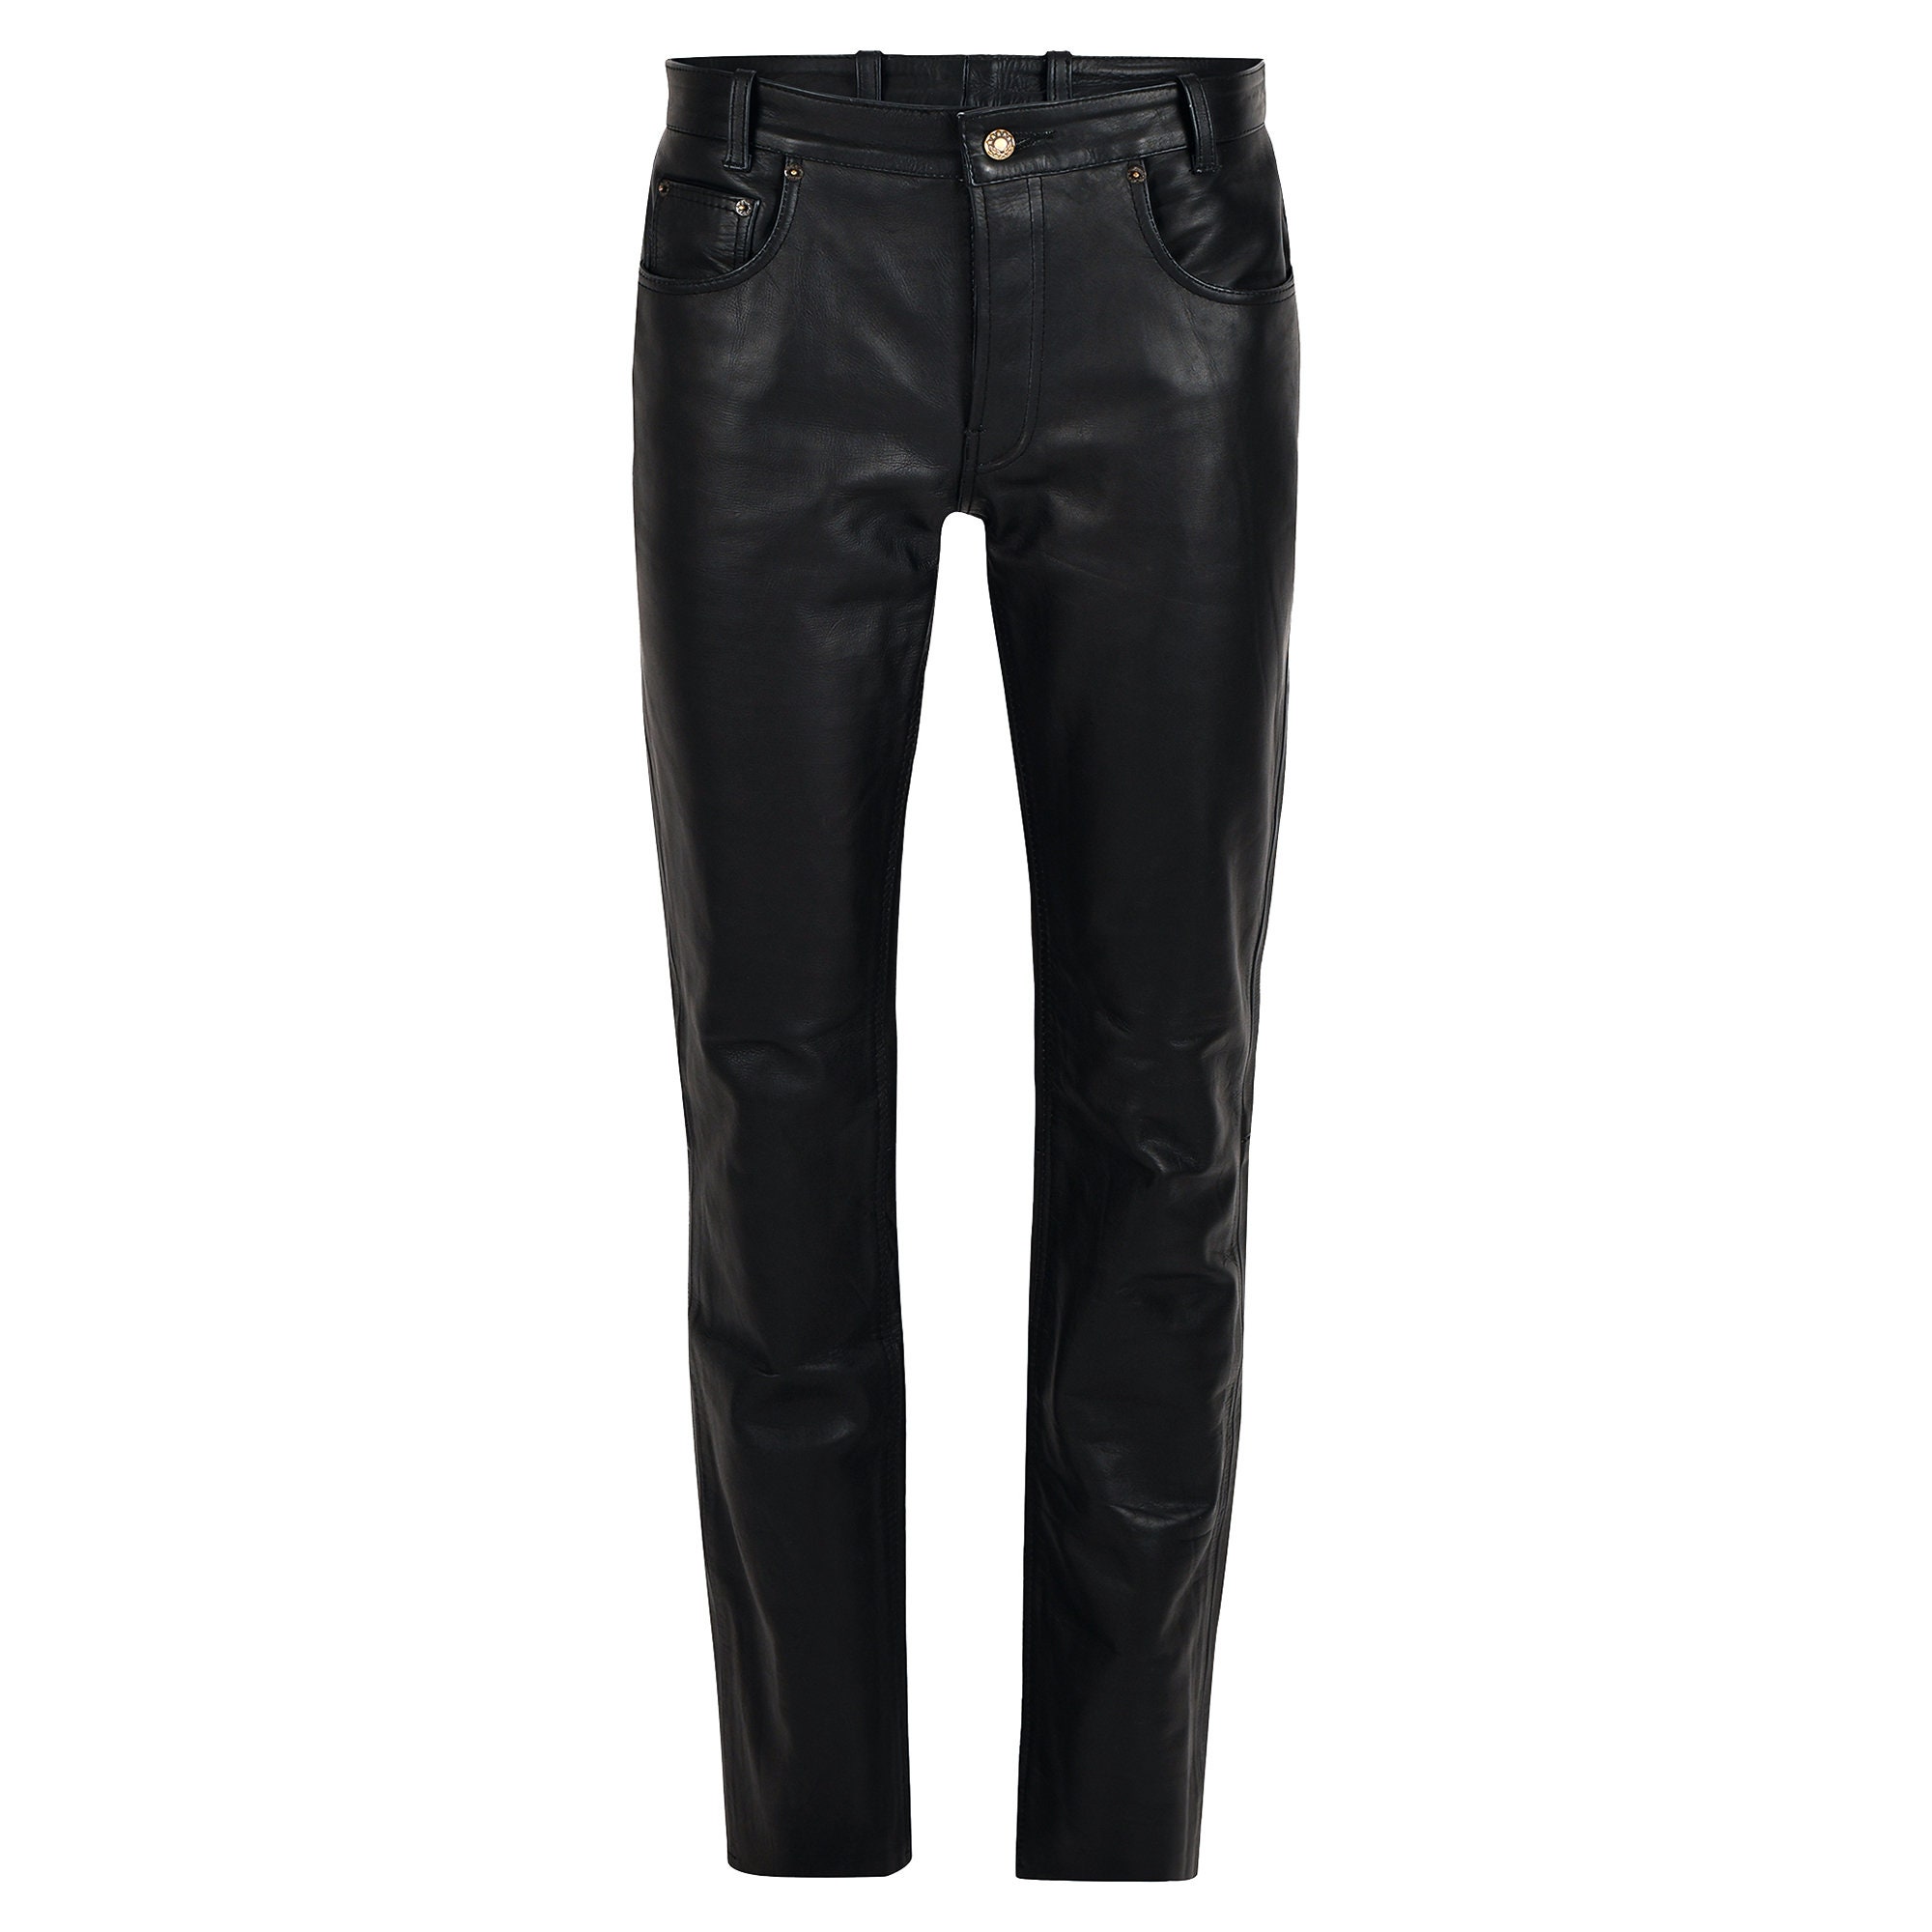 Leather Jeans by Bohmberg / 5 Pocket Style / - Etsy Ireland